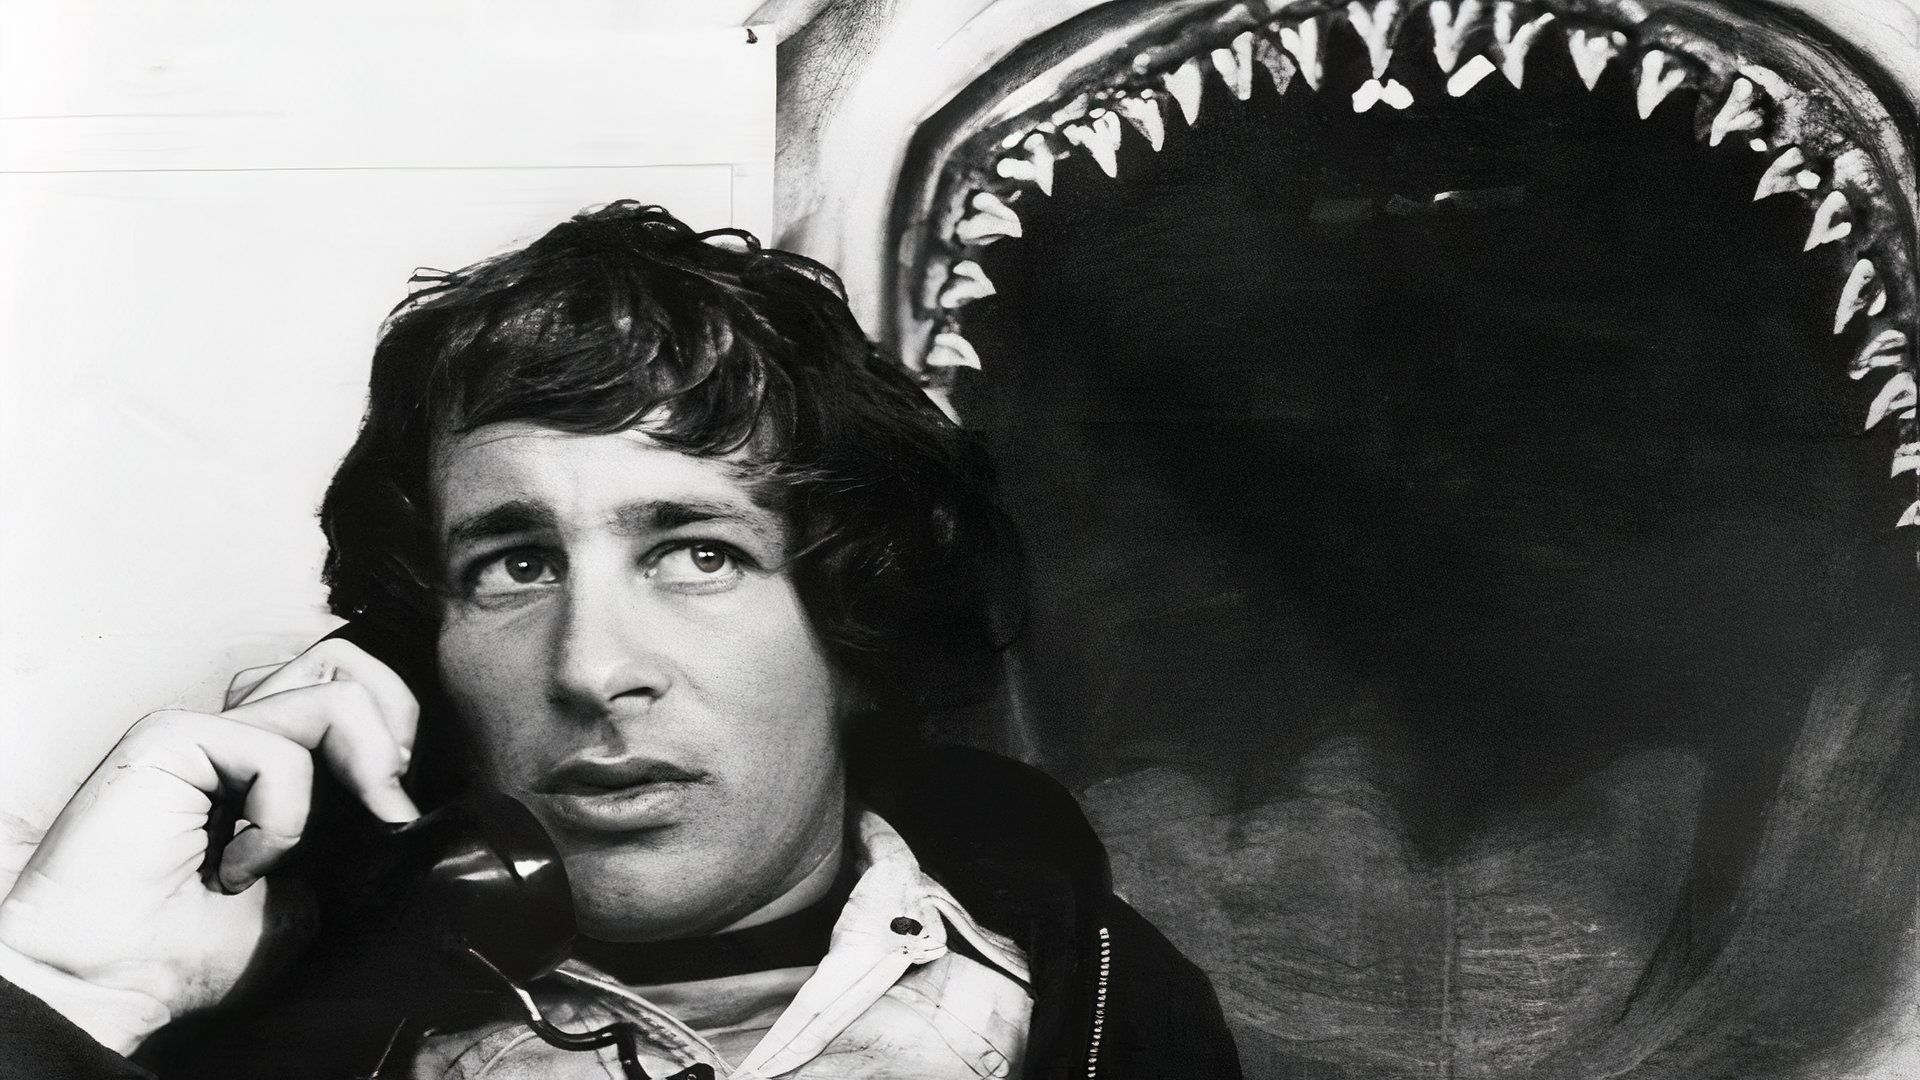 Steven Spielberg on set of Jaws